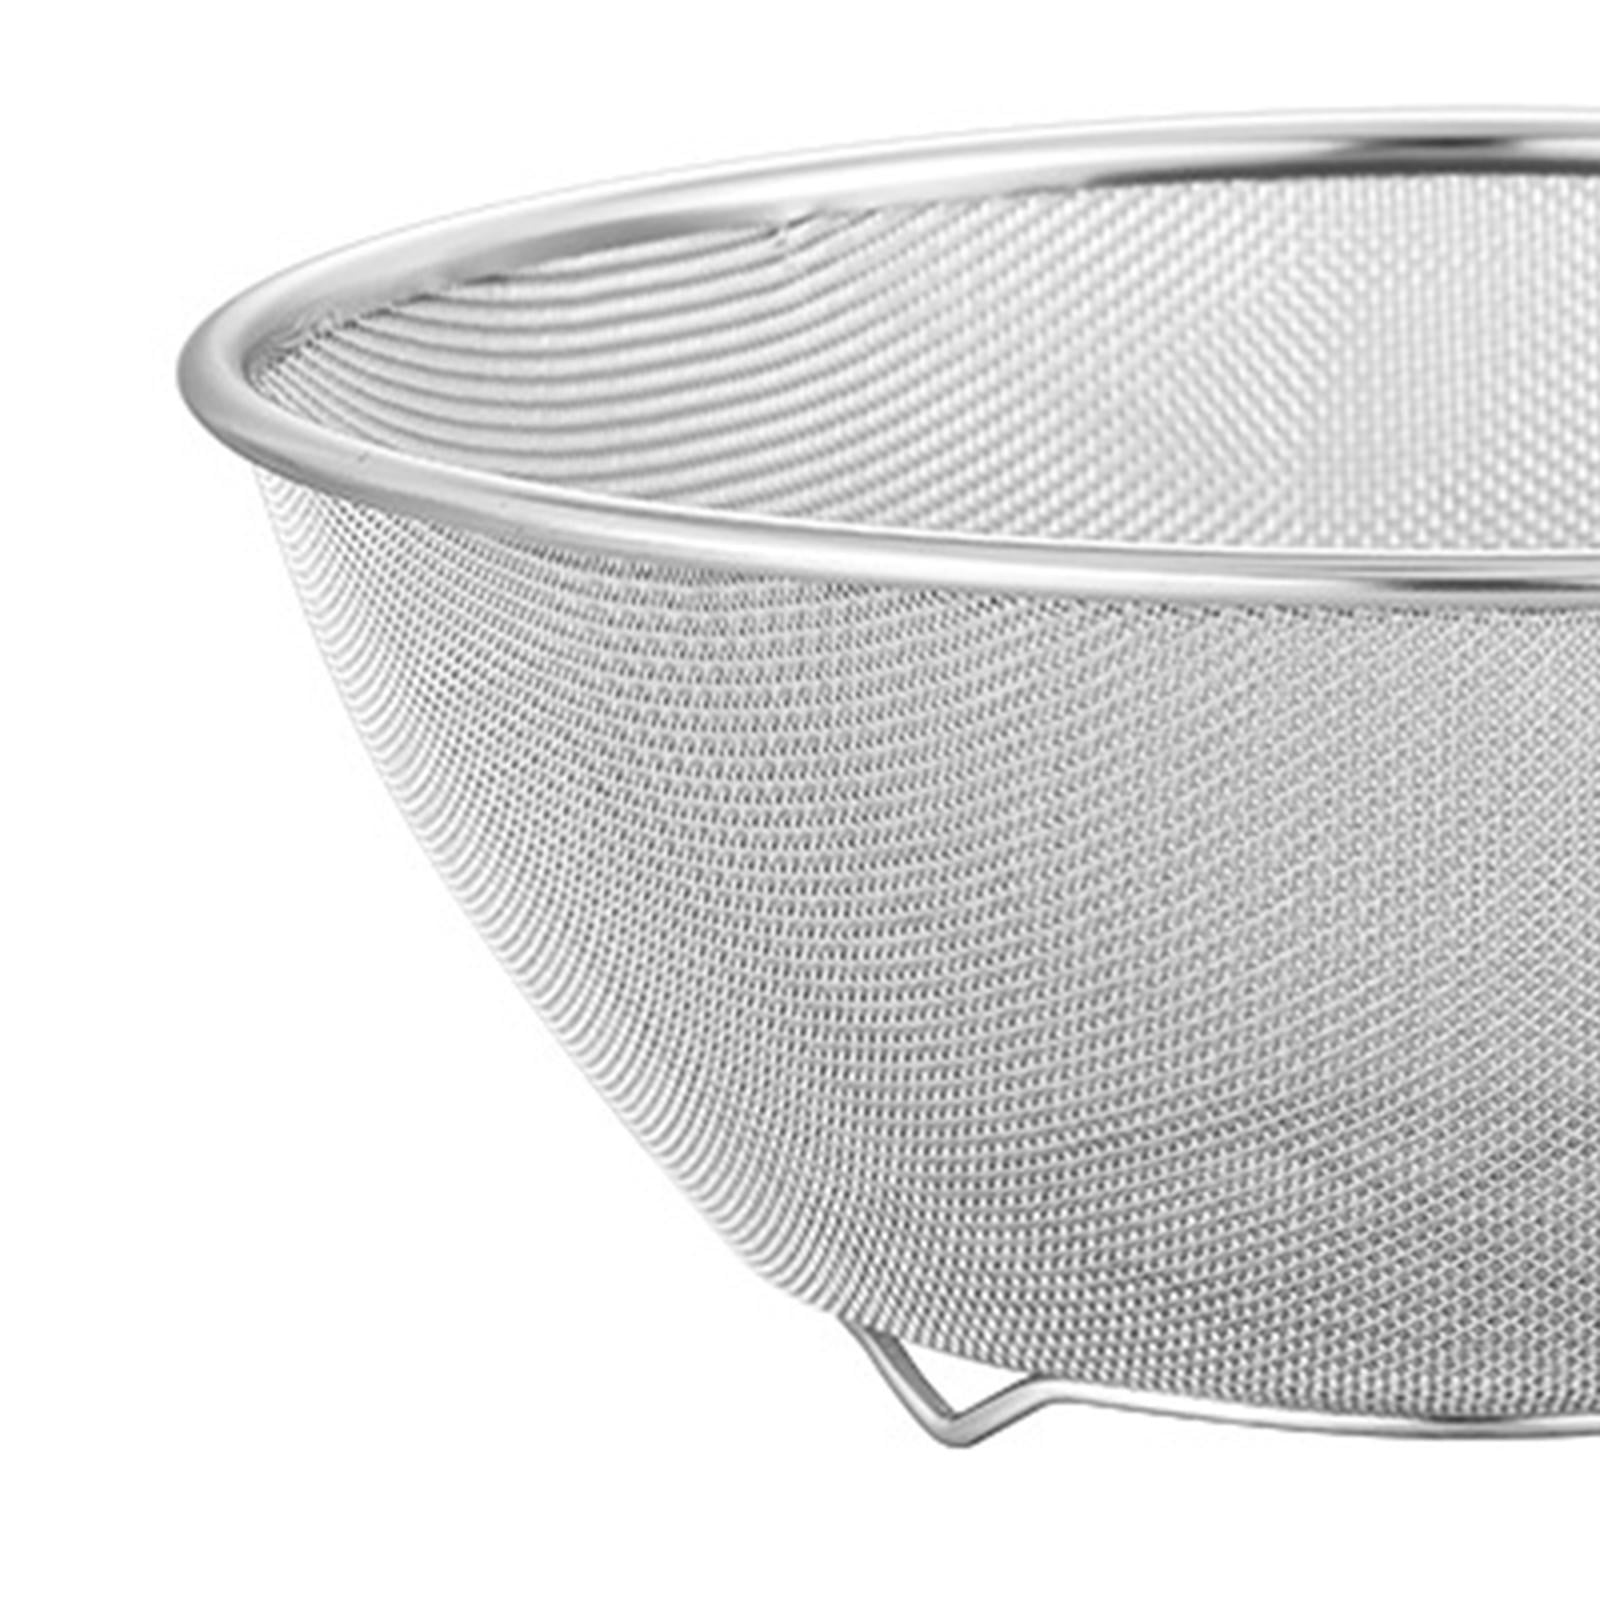 POPGRADE Stainless Steel Colander Strainer Bowl Set, Rice Fruit Washing  Bowl Basket, Rice Fruit Rinser Strainer Container Washer Bowl for Kitchen